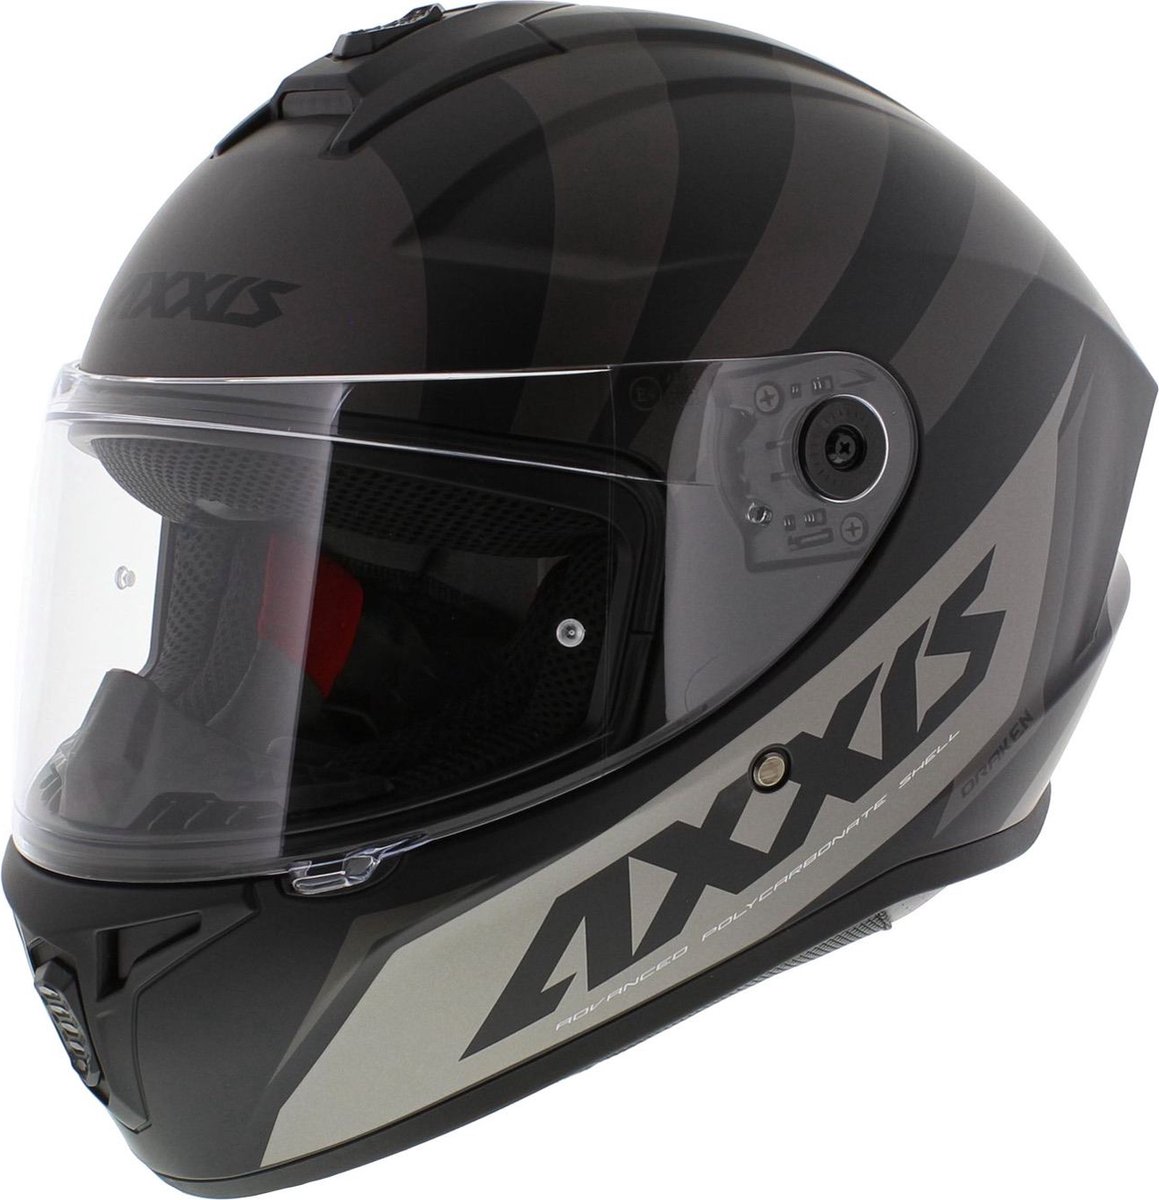 Axxis Draken S integraal helm Premier mat zwart L - Motor / Scooter / Karting